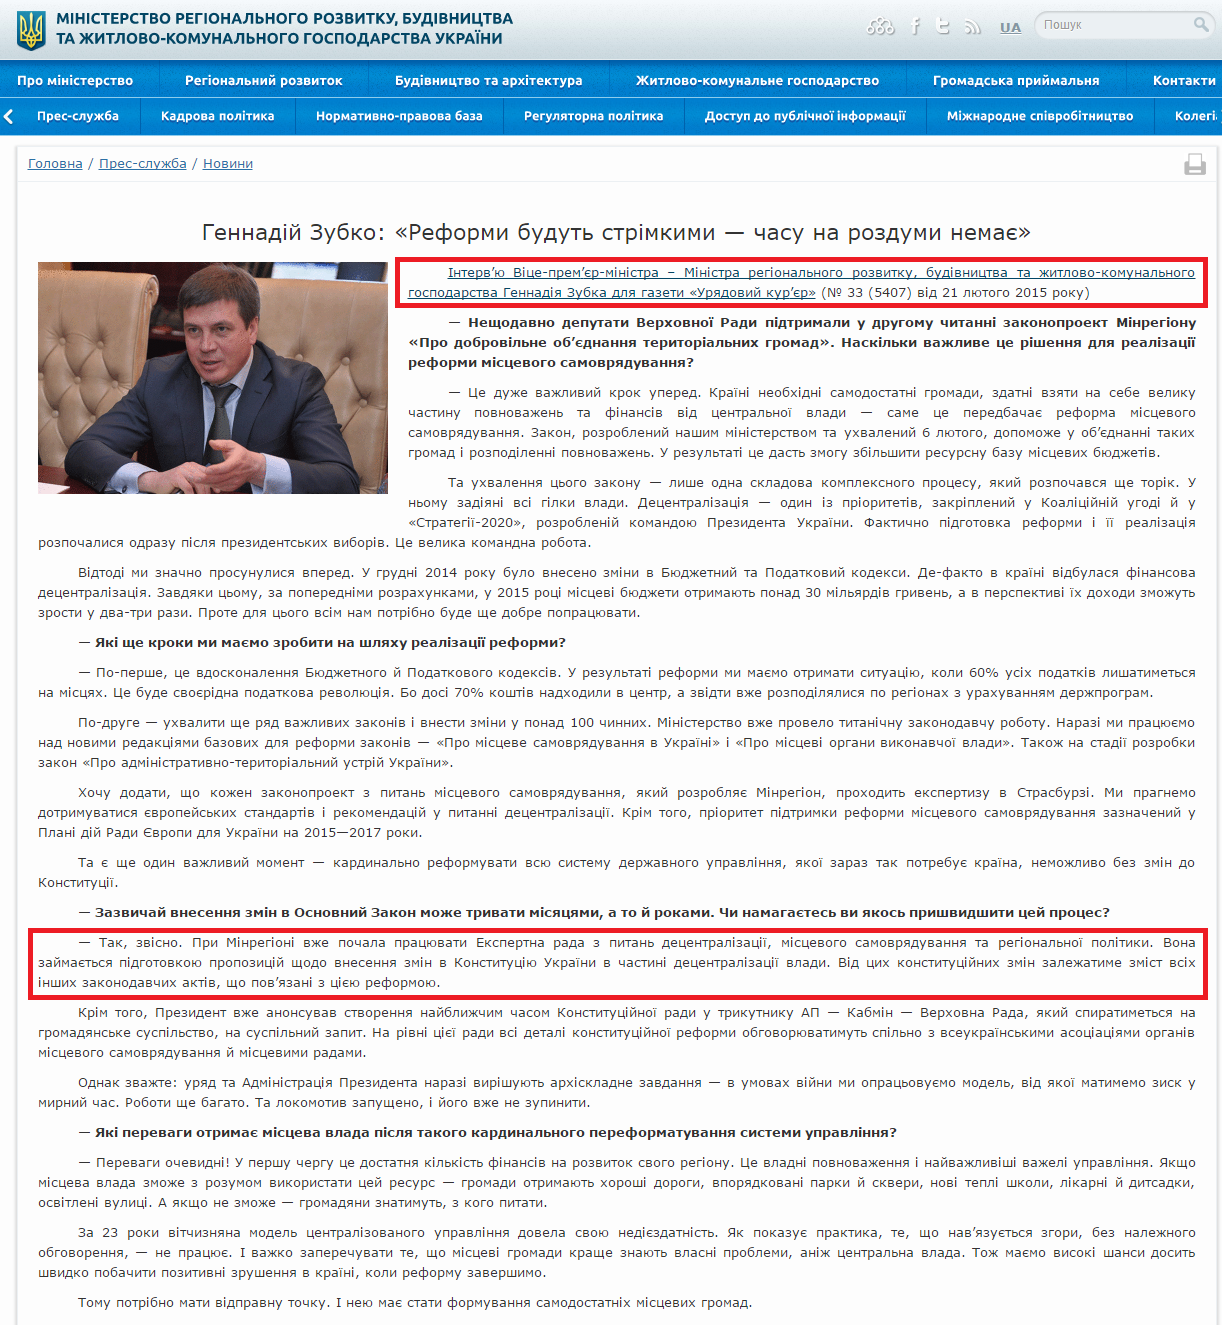 http://www.minregion.gov.ua/news/gennadiy-zubko--reformi-budut-strimkimi--chasu-na-rozdumi-nemae-148108/